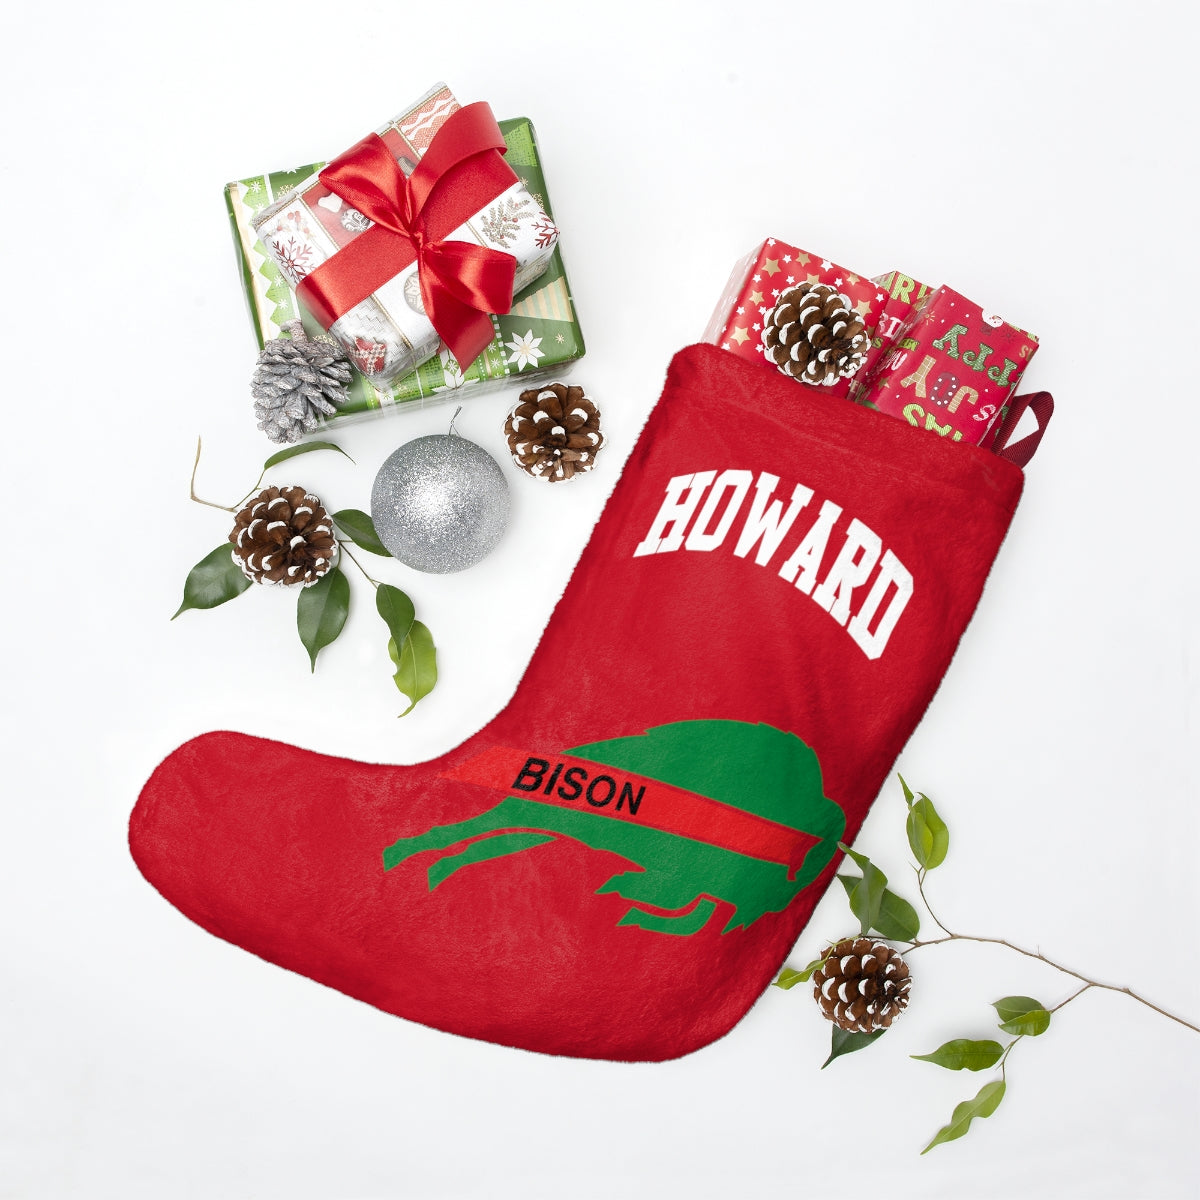 Howard Red Christmas Stockings